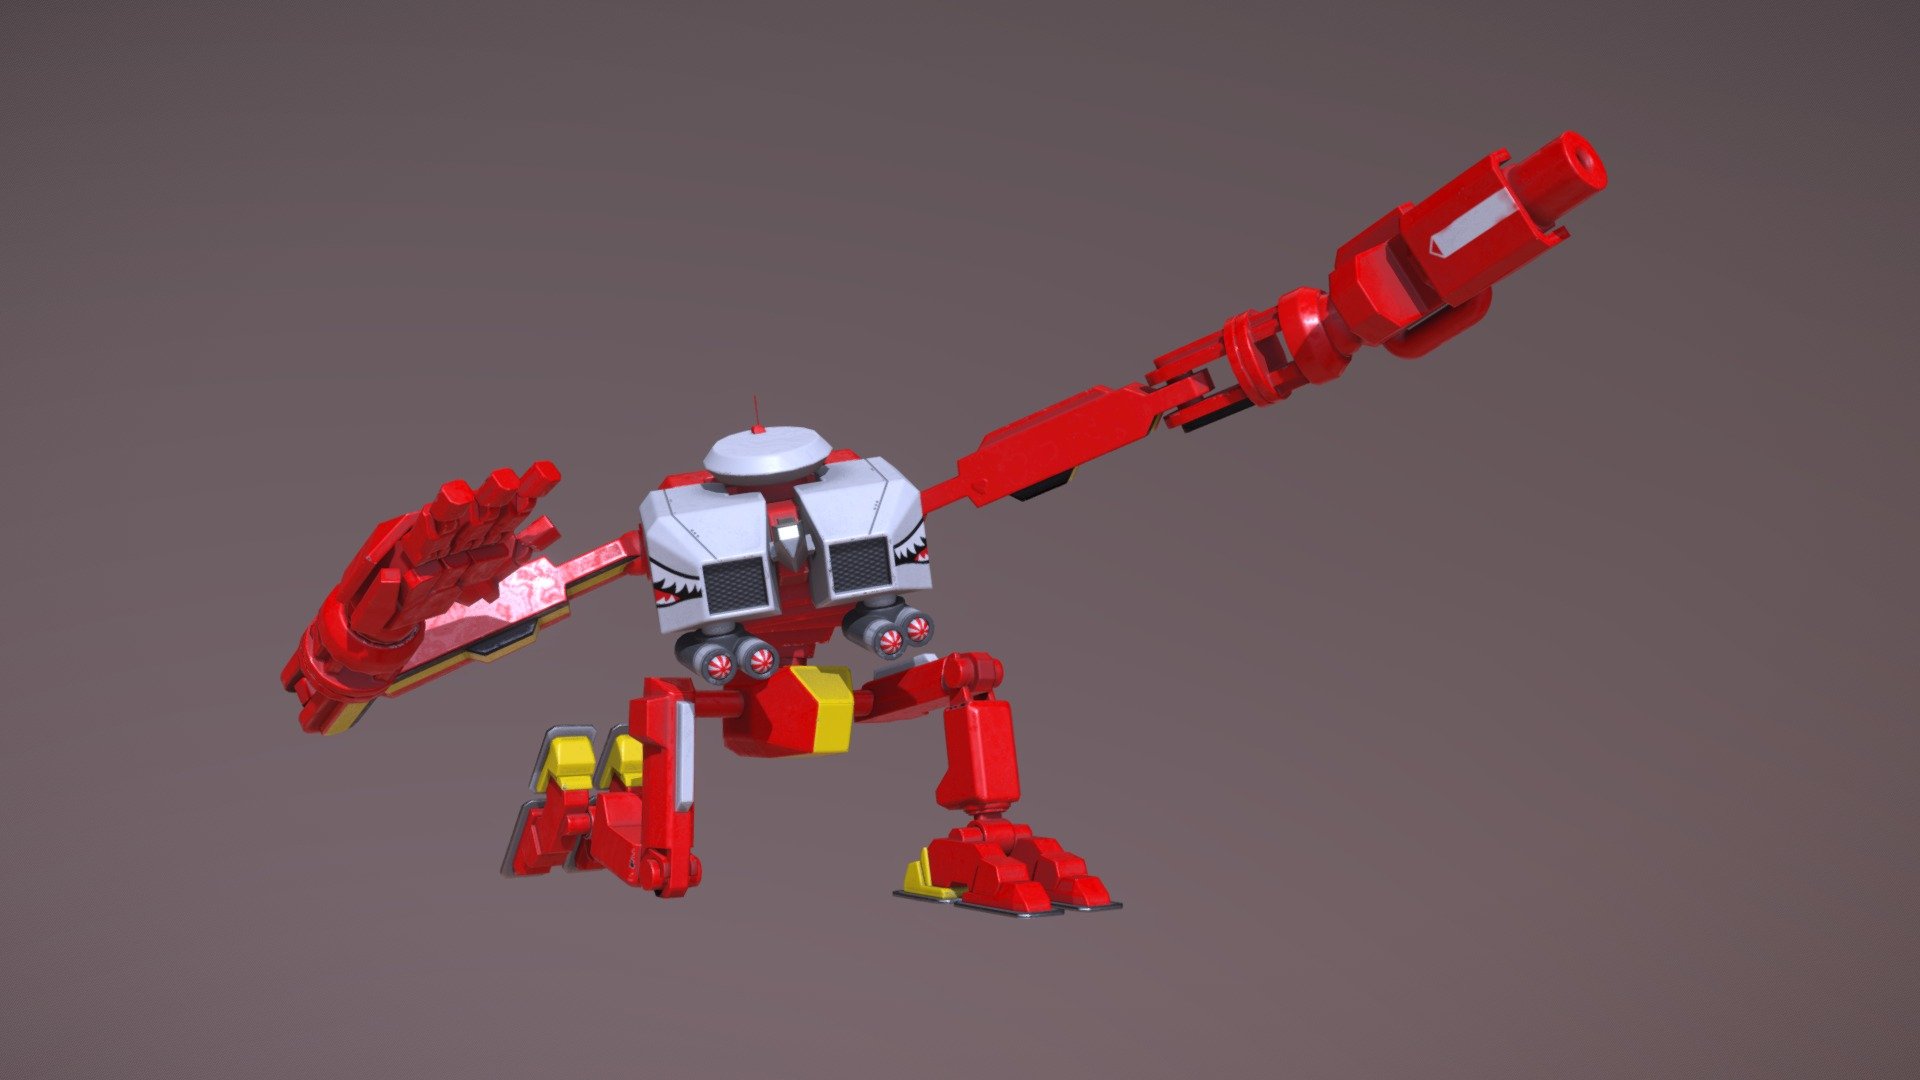 Robot (theme: Red Devils, marchetti show-team)